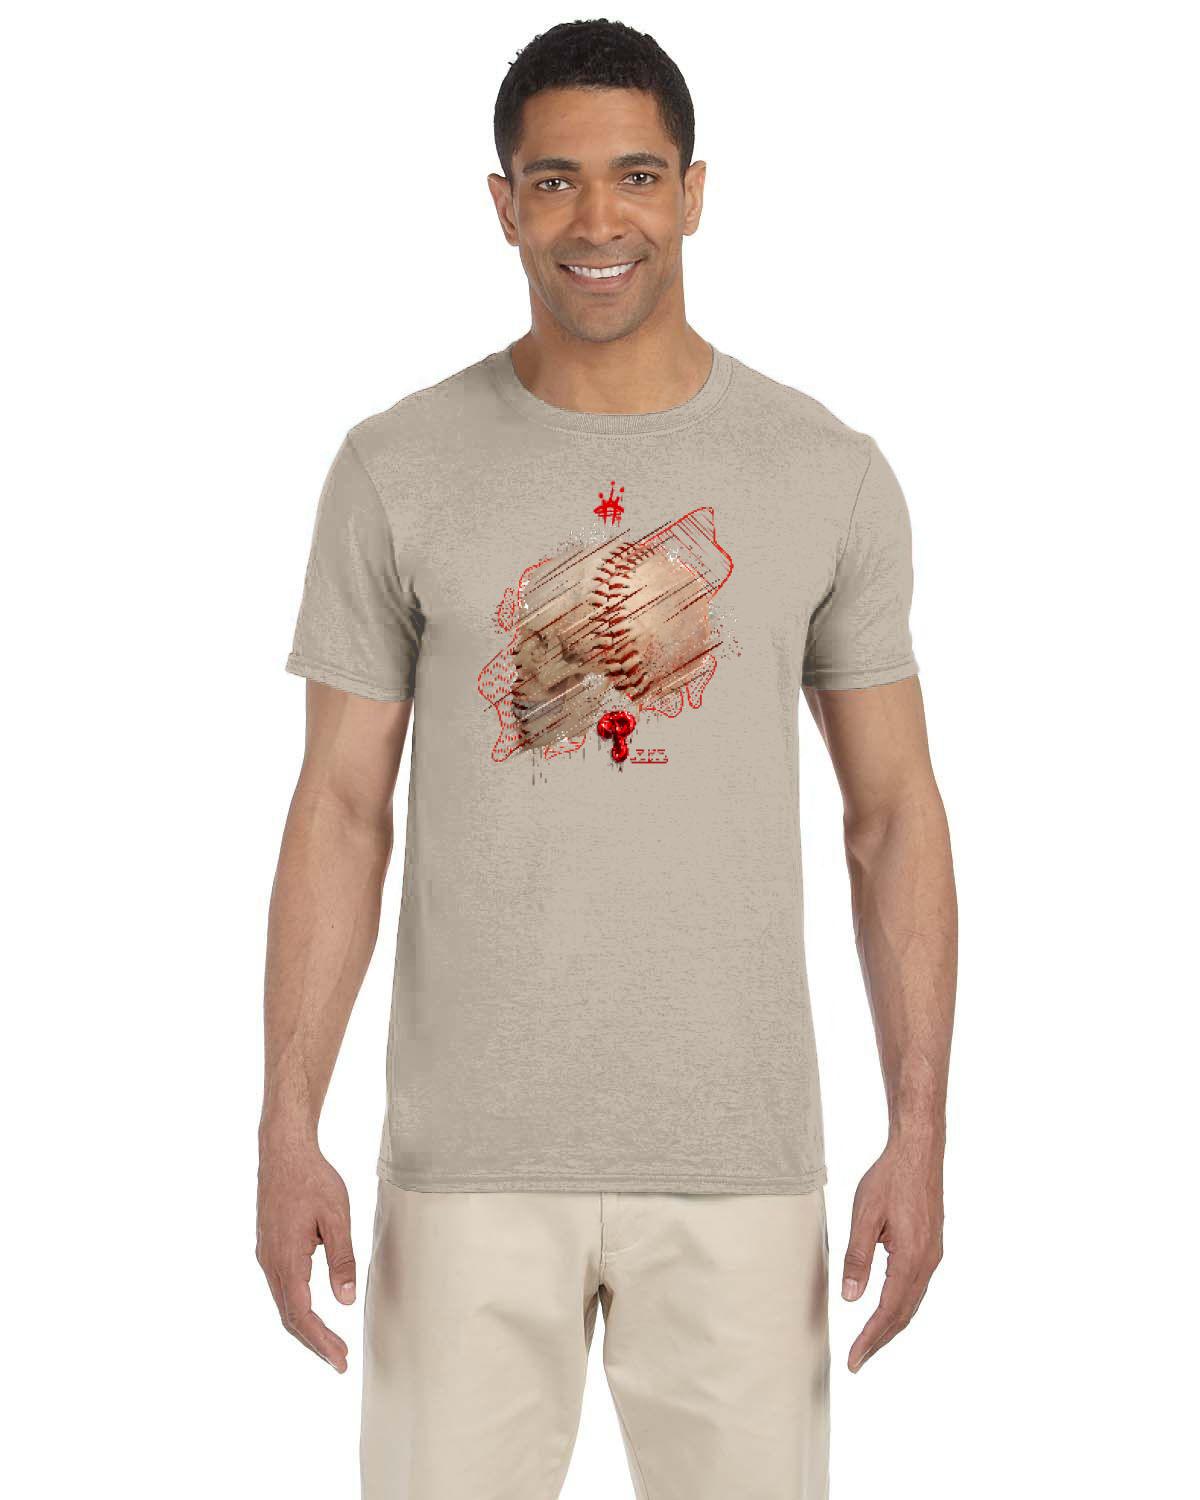 Philly Baseball Skull Red Tee (Gildan Adult Softstyle 7.5 oz./lin. yd. T-Shirt | G640)